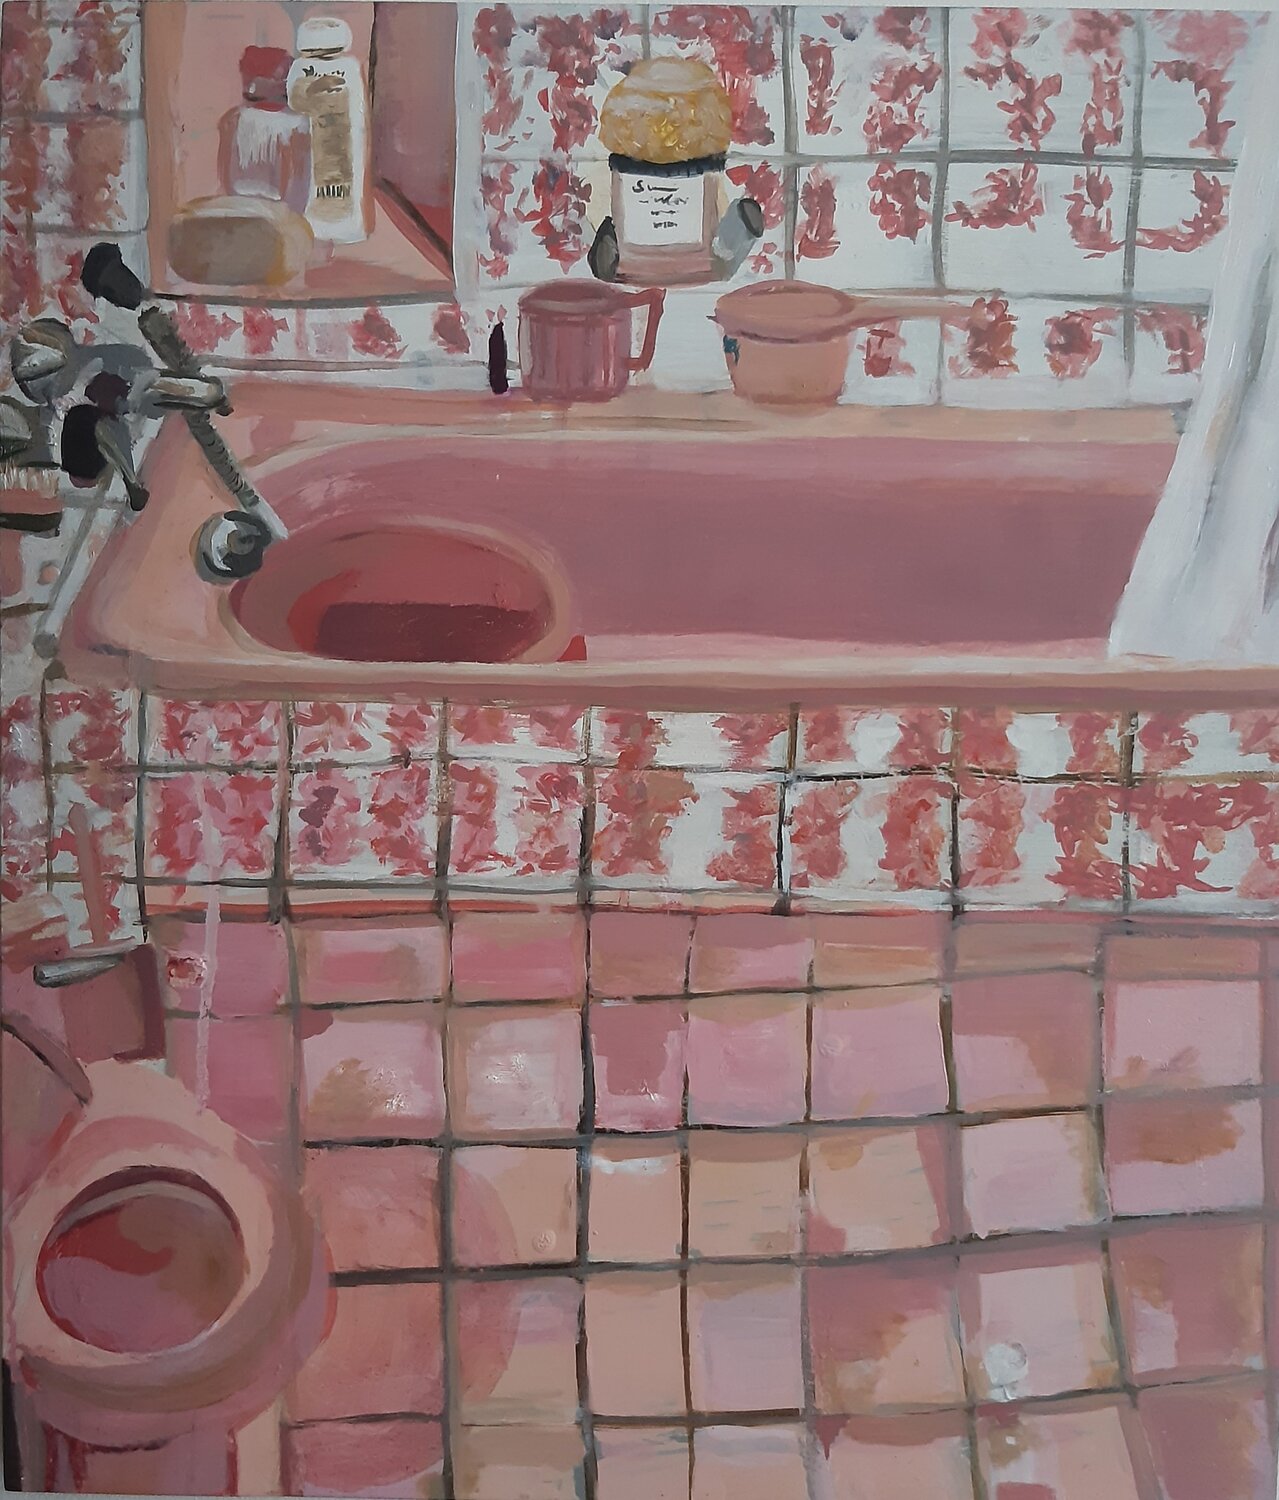 Yves Saint Laurent Ysl Toilet Paper, Peinture par Tony Rubino